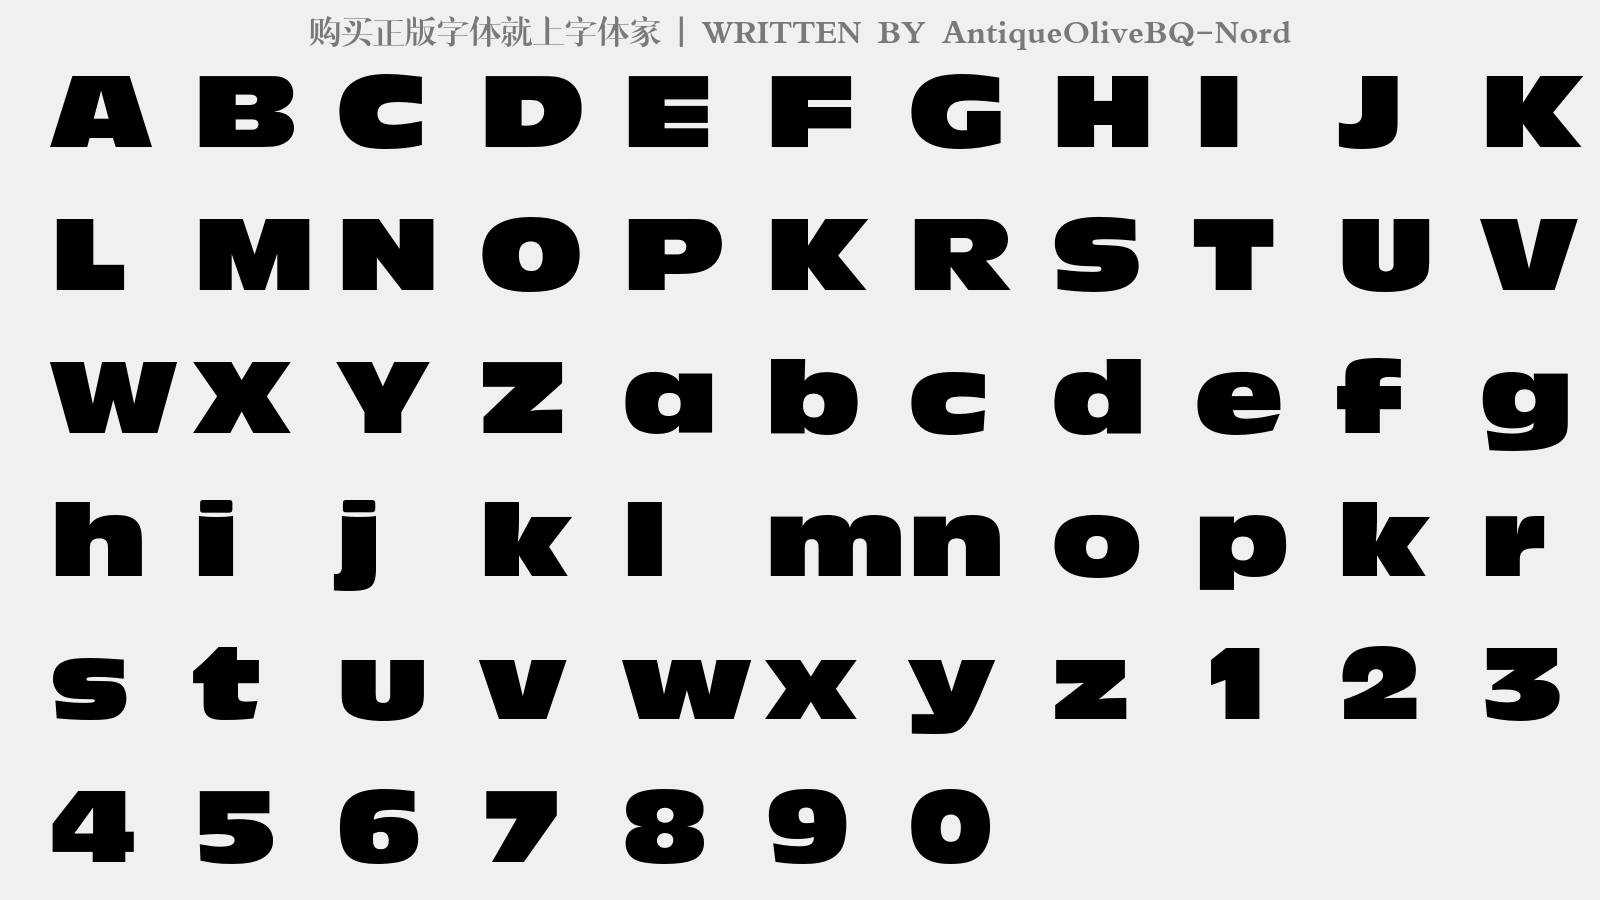 AntiqueOliveBQ-Nord - 大写字母/小写字母/数字